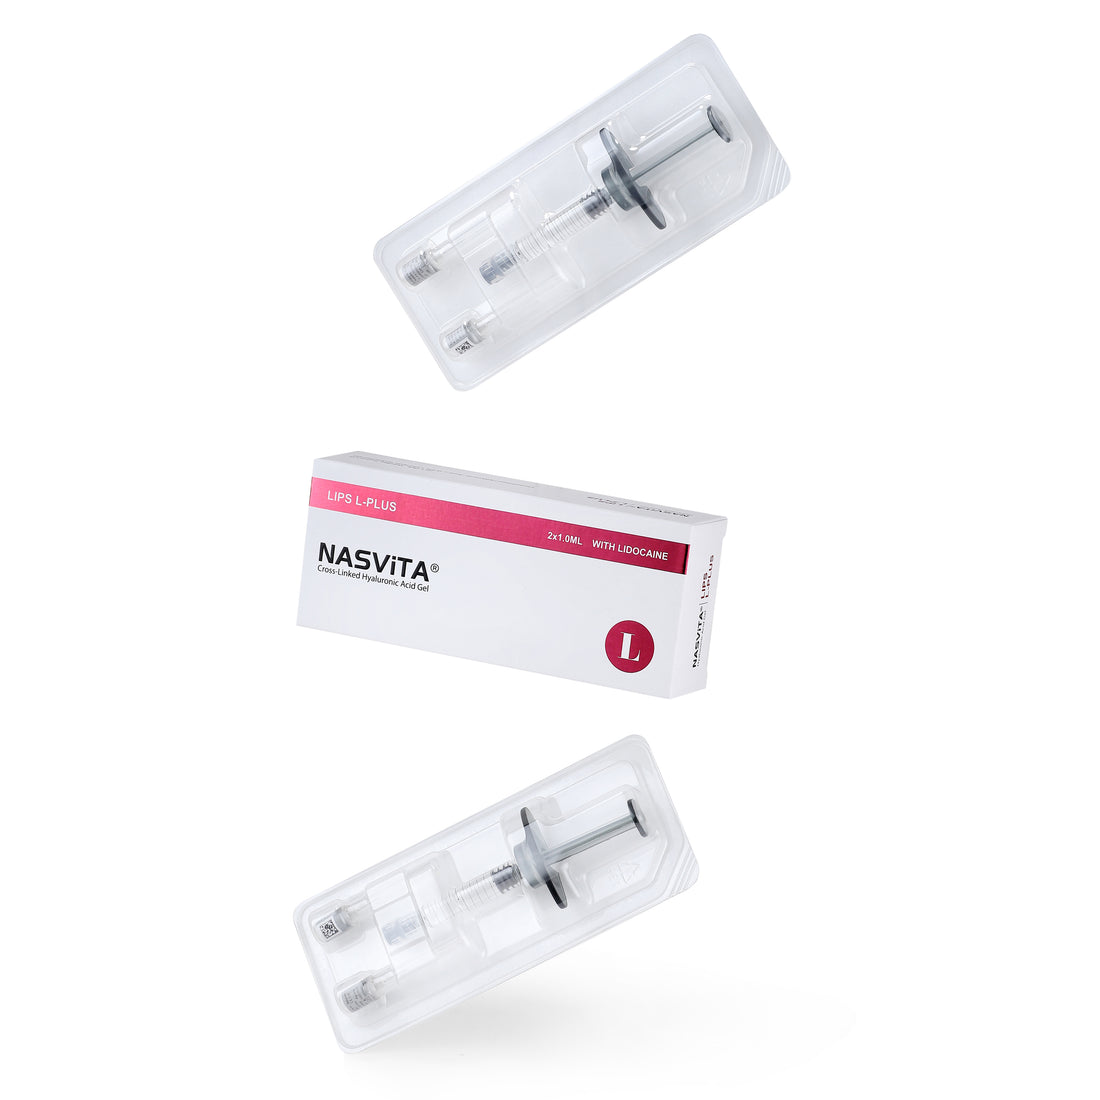 NASViTA LIPS L-PLUS Hyaluronic Acid Filler with Lido for Lip Augmentation  1 ml * 2 Syringes